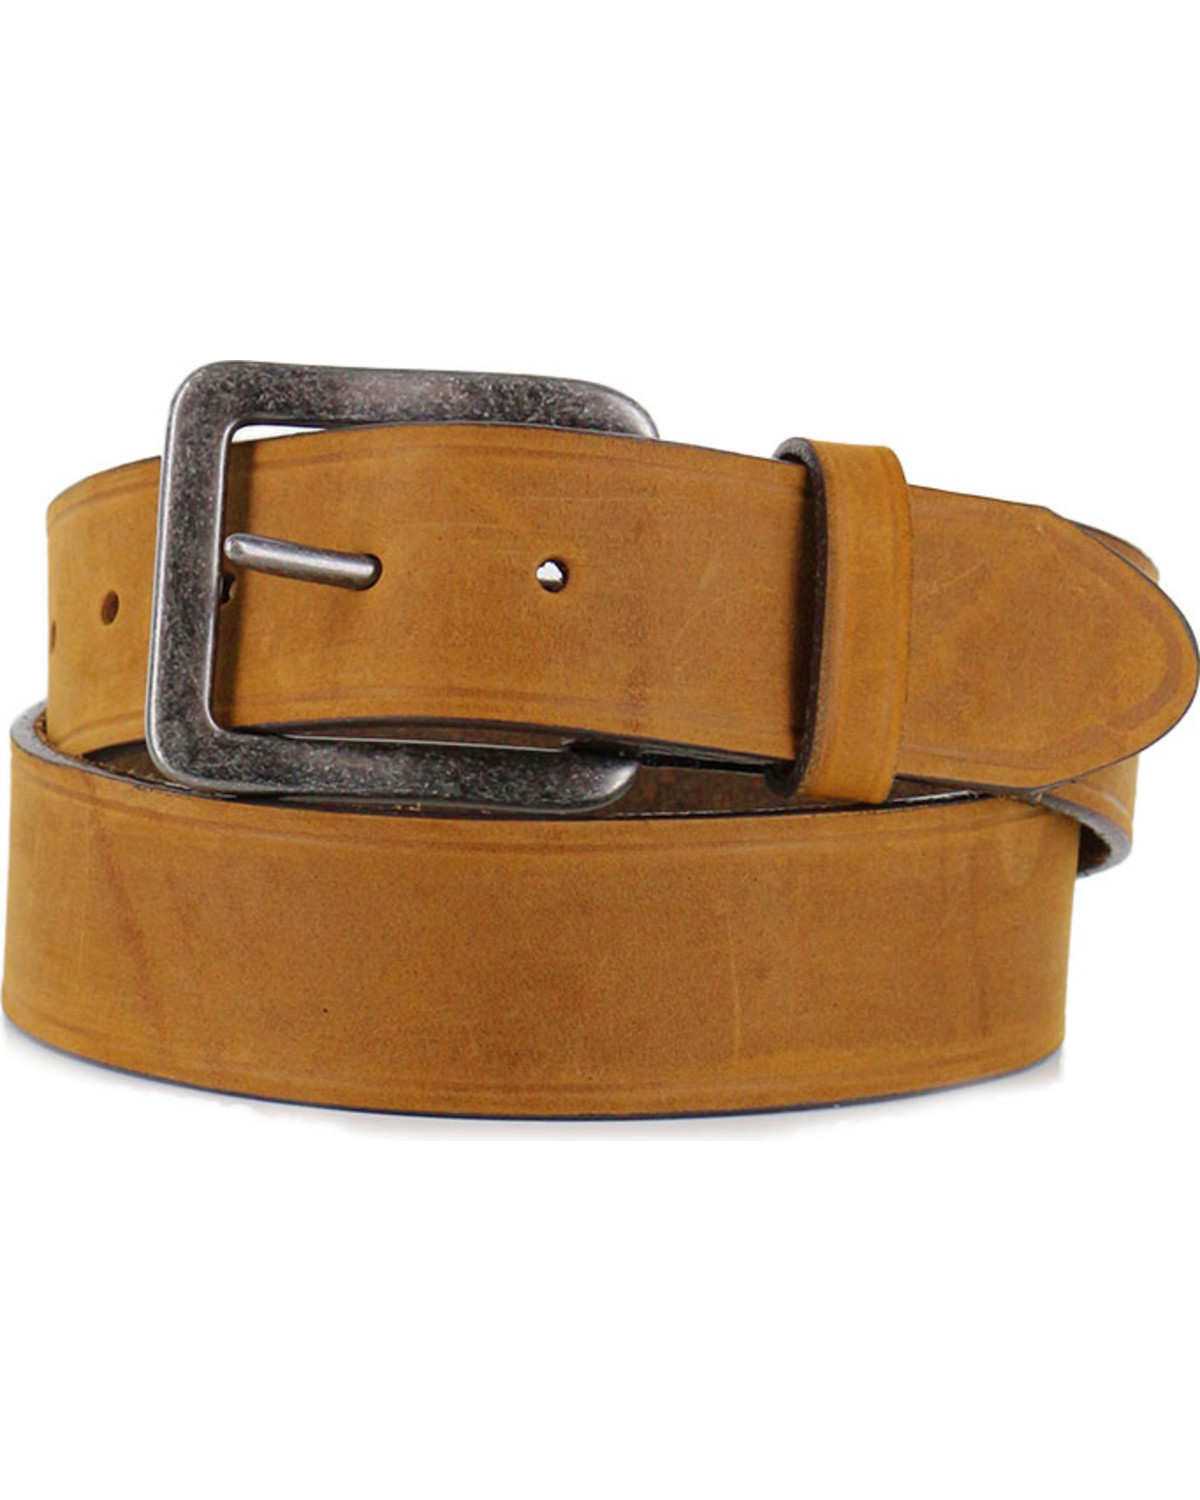 Chippewa Men's Logger Bark Leather Belt